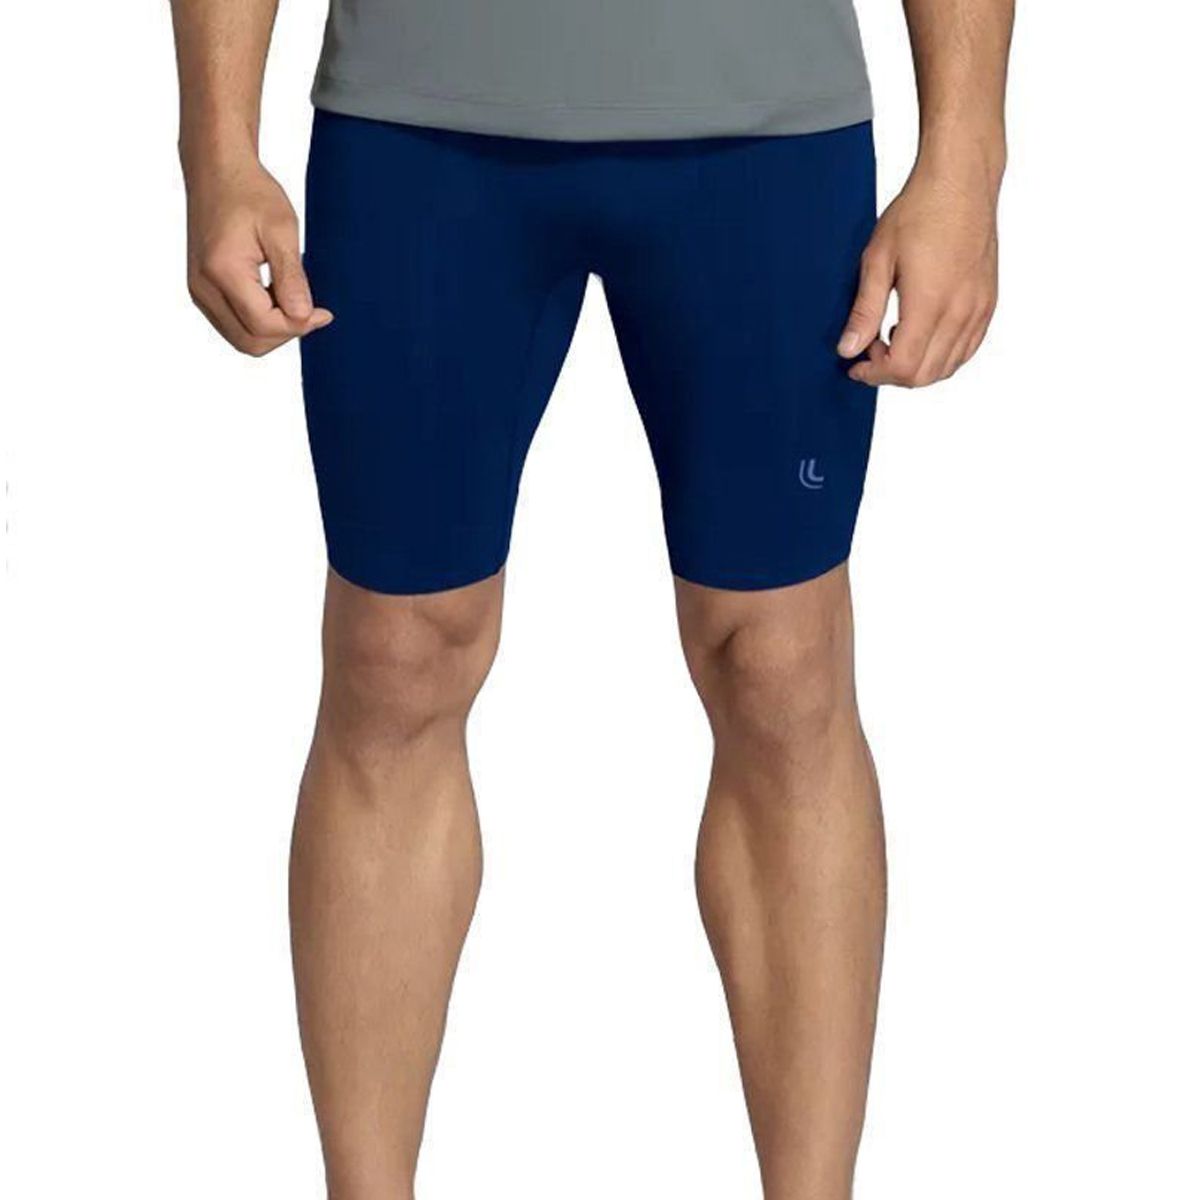 Shorts Masculino Lupo com Alta Compressão Bermuda Térmica imax  - Bra Lingerie